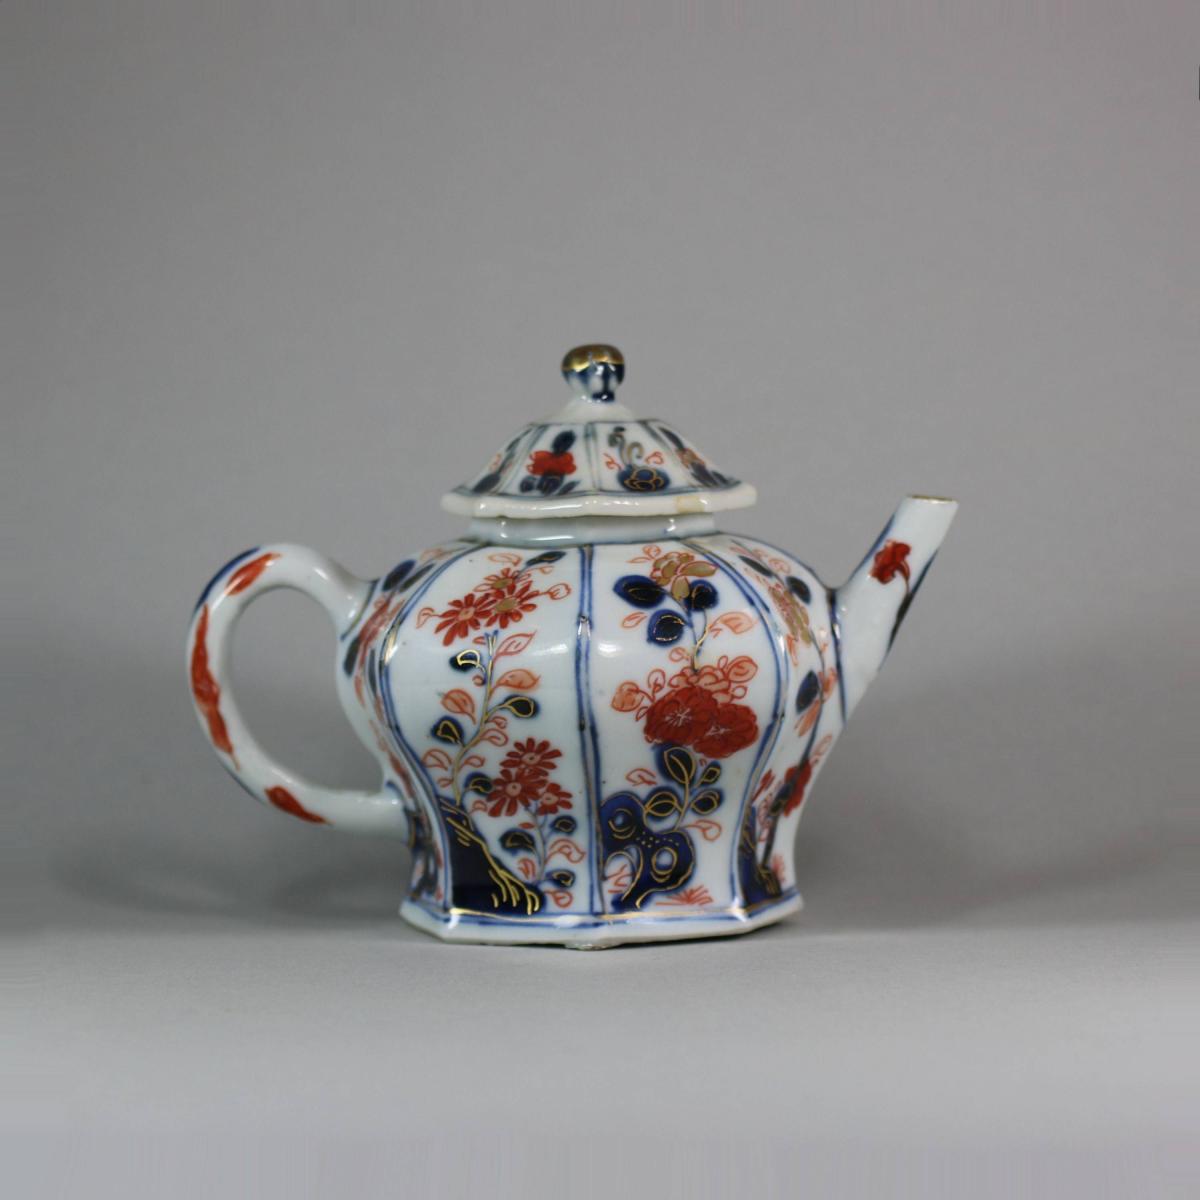 Alternative angle of 18th century Imari teapot